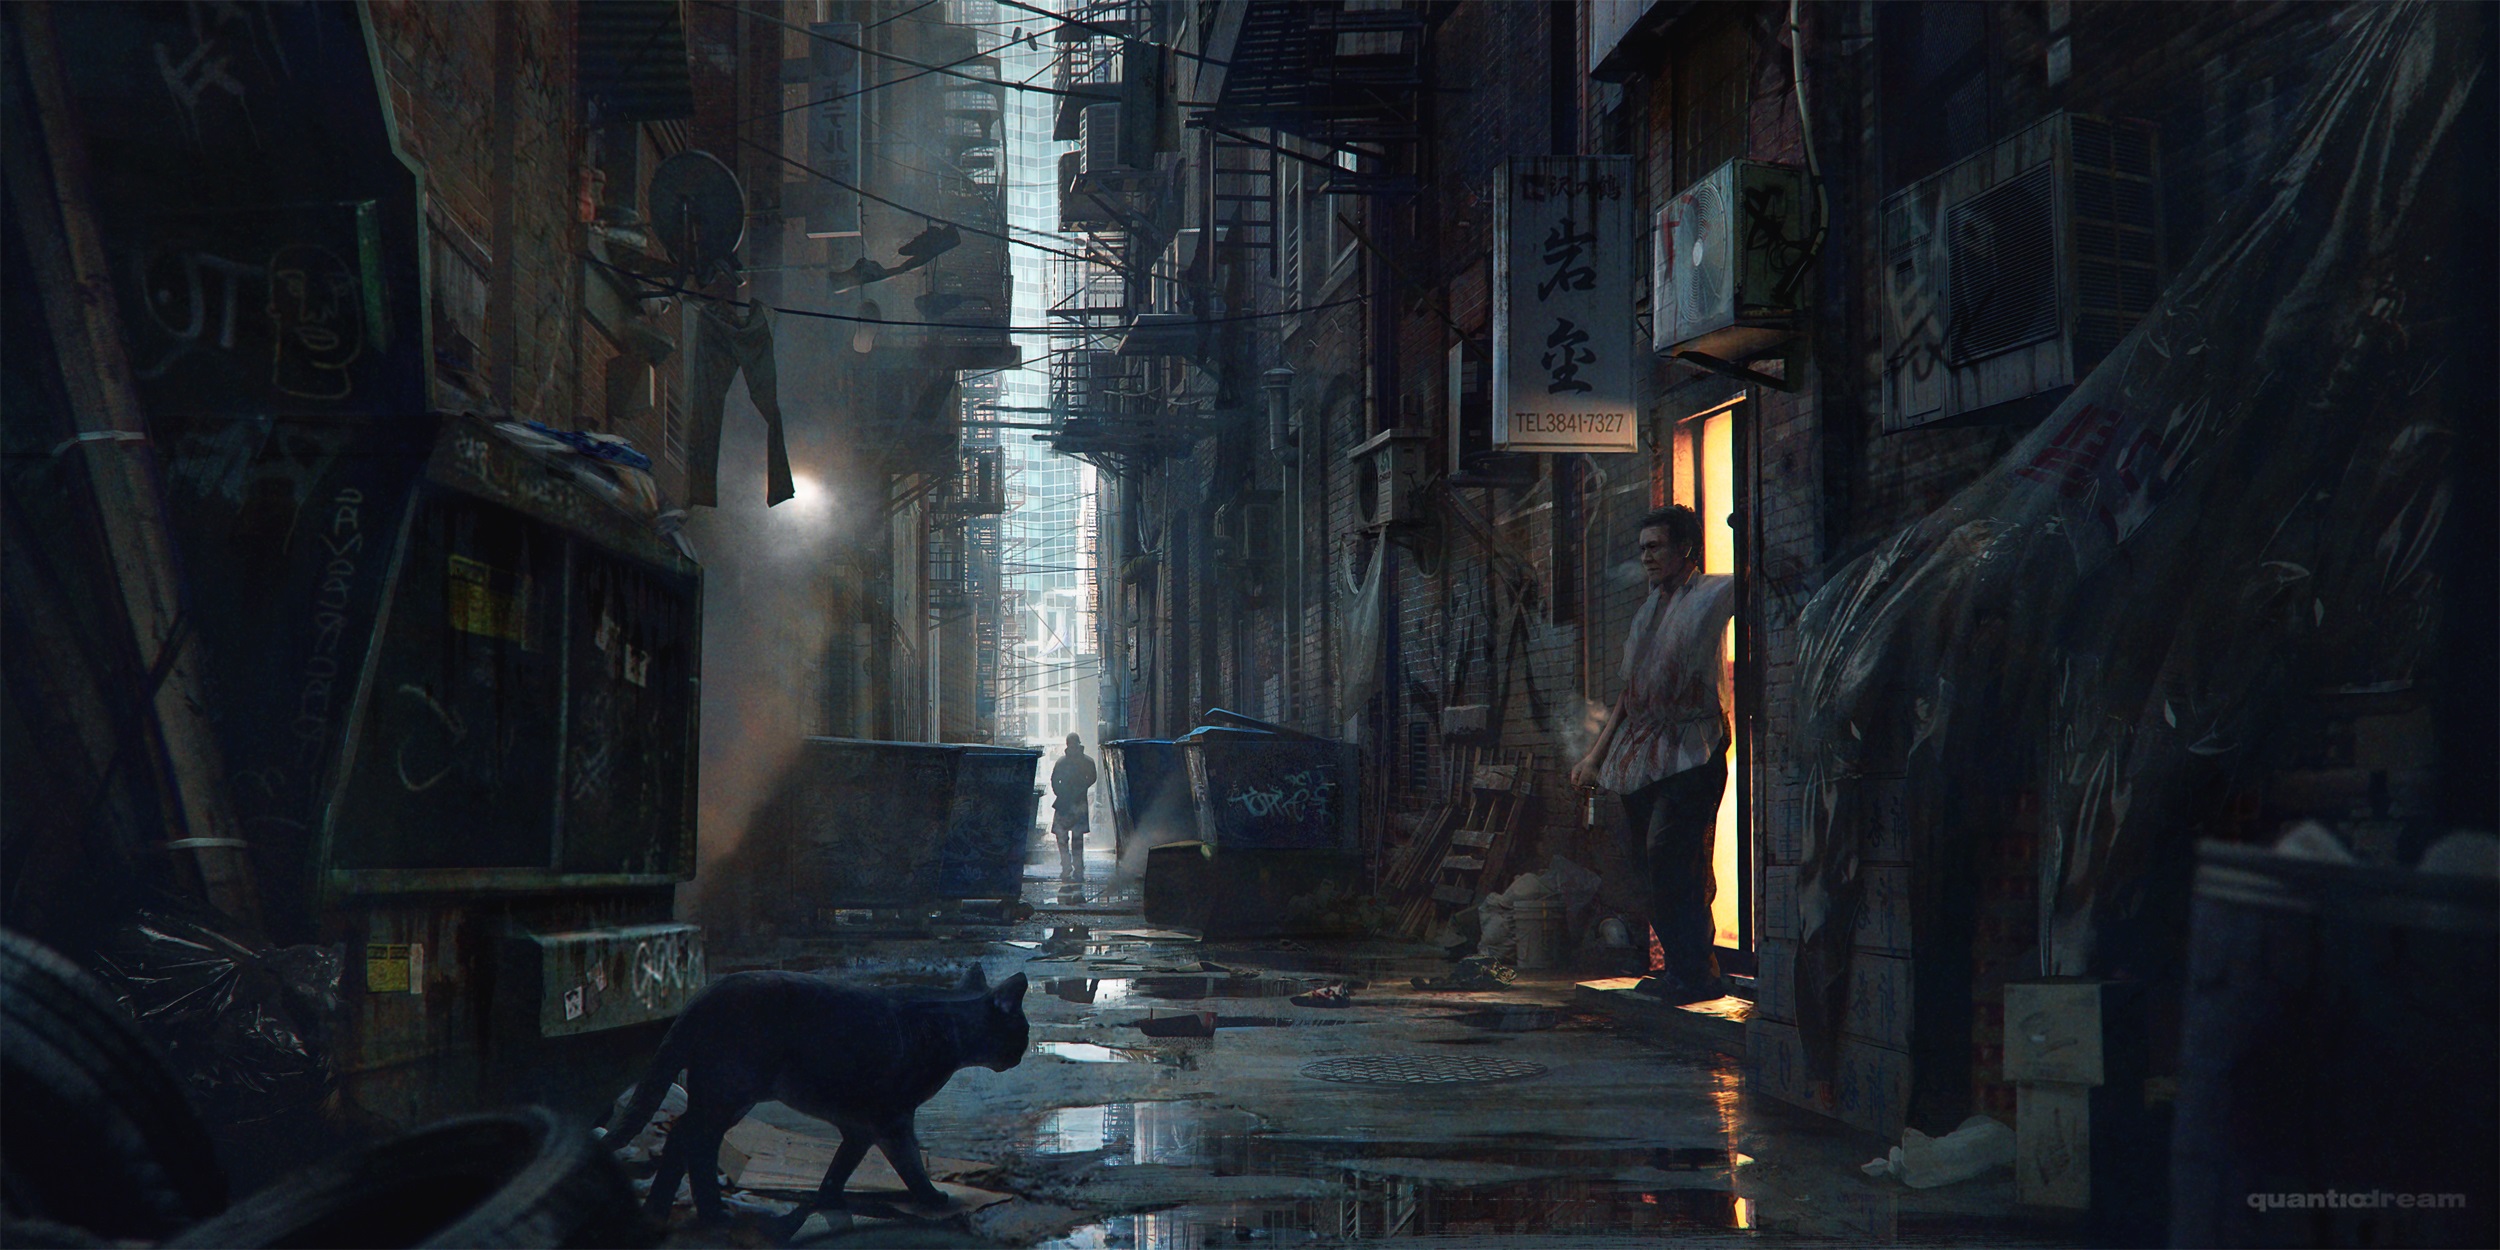 General 2500x1250 Wojtek Fus Asia city street cats alleyway fantasy art